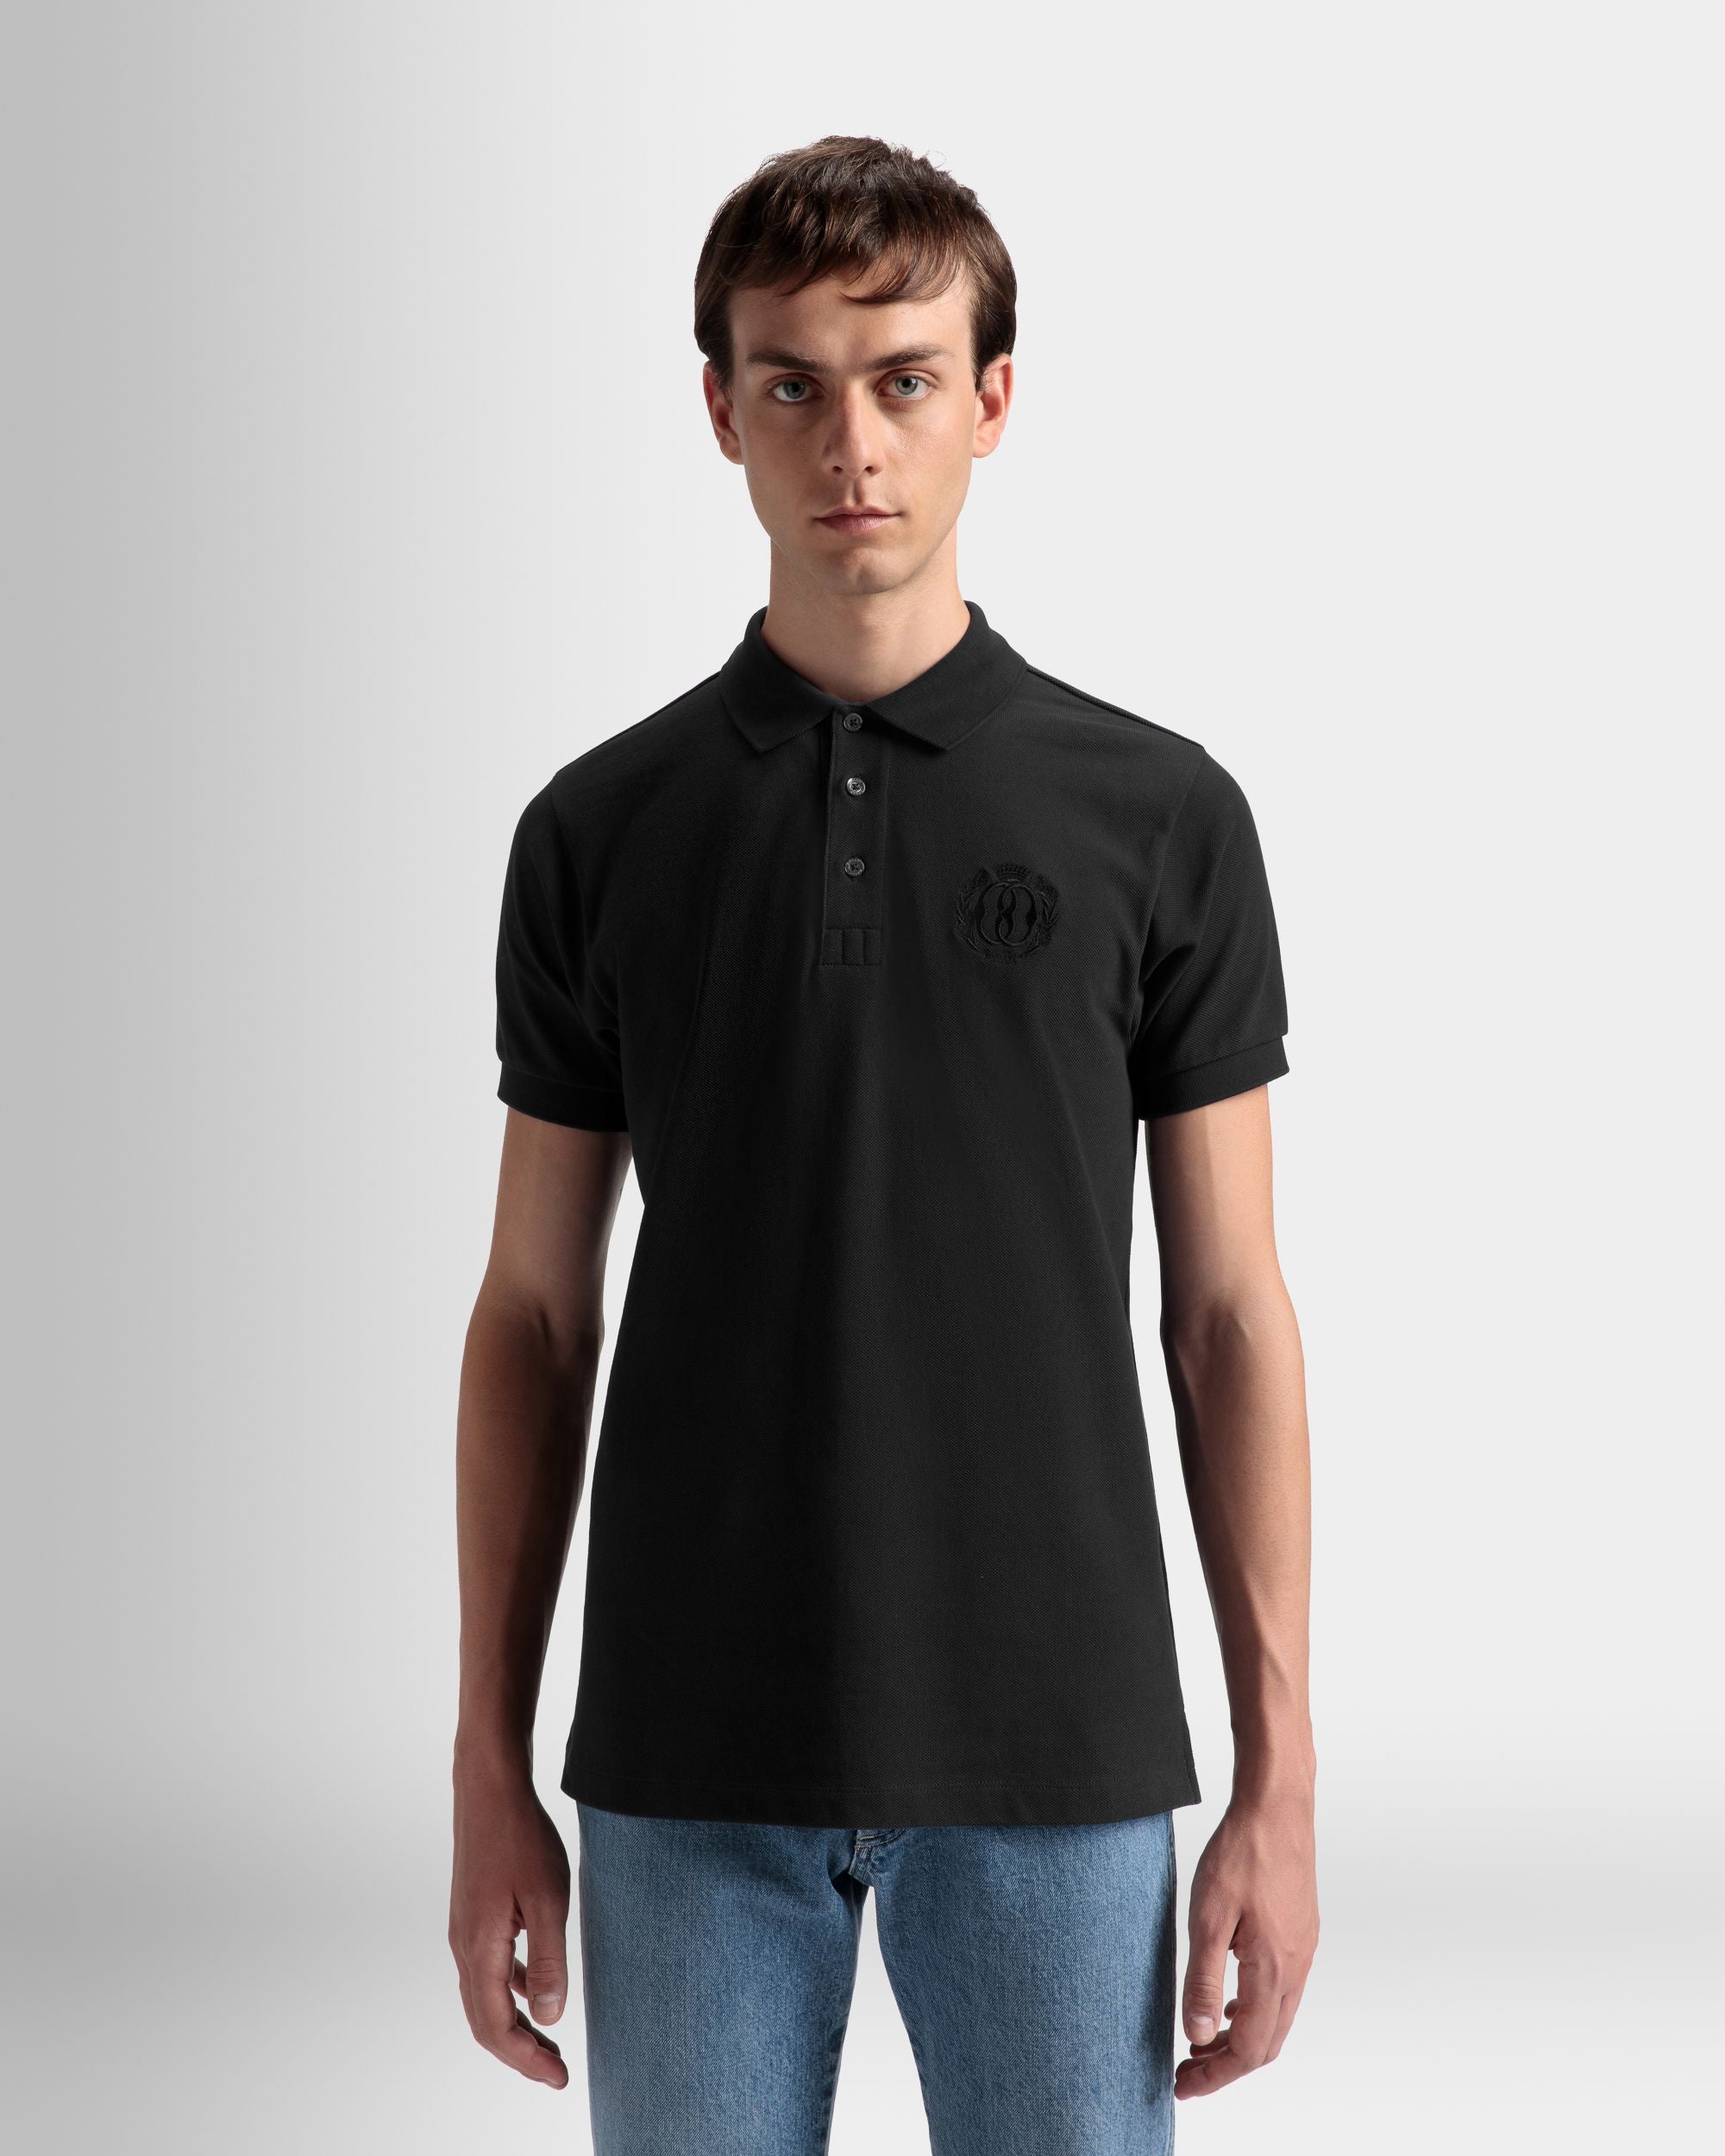 Emblem Poloshirt | Poloshirt für Herren | Schwarze Baumwolle | Bally | Model getragen Nahaufnahme